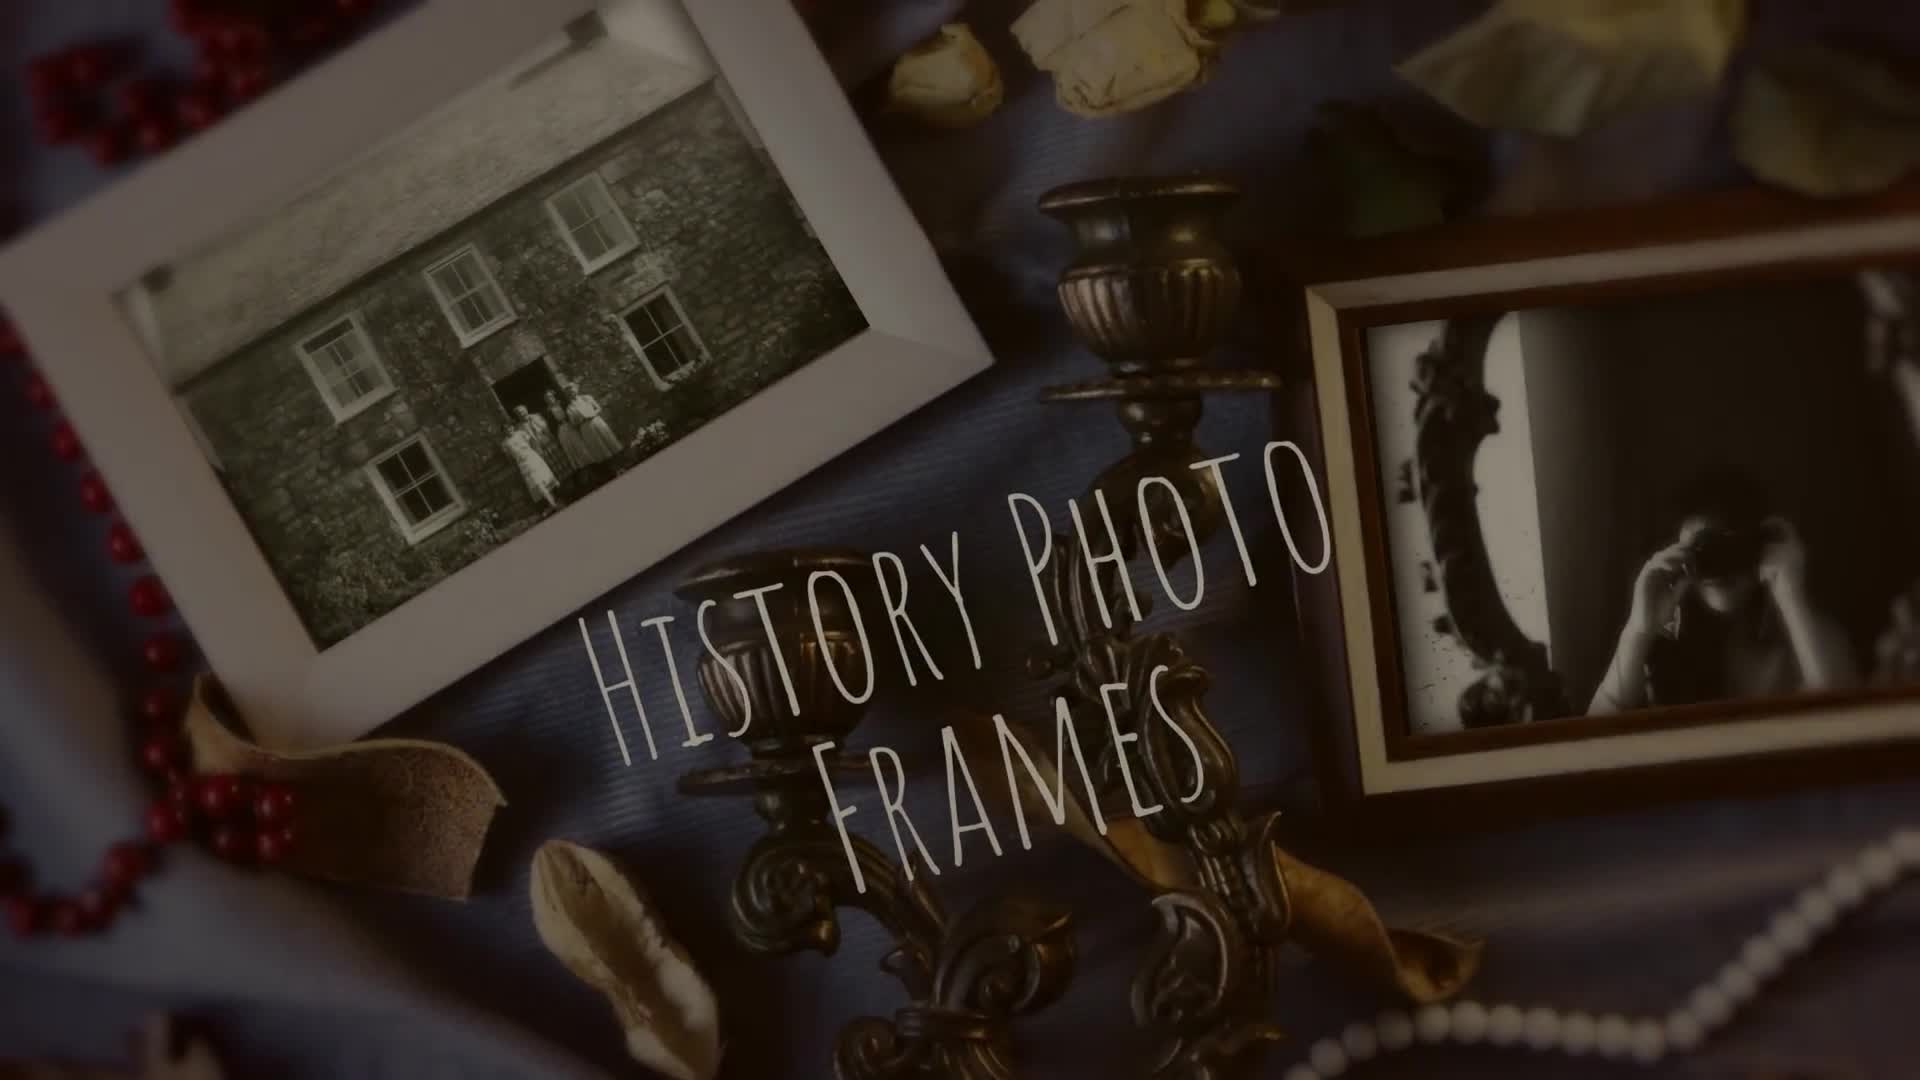 History Photo Frames Cinematic Opener Videohive 32443680 DaVinci Resolve Image 1